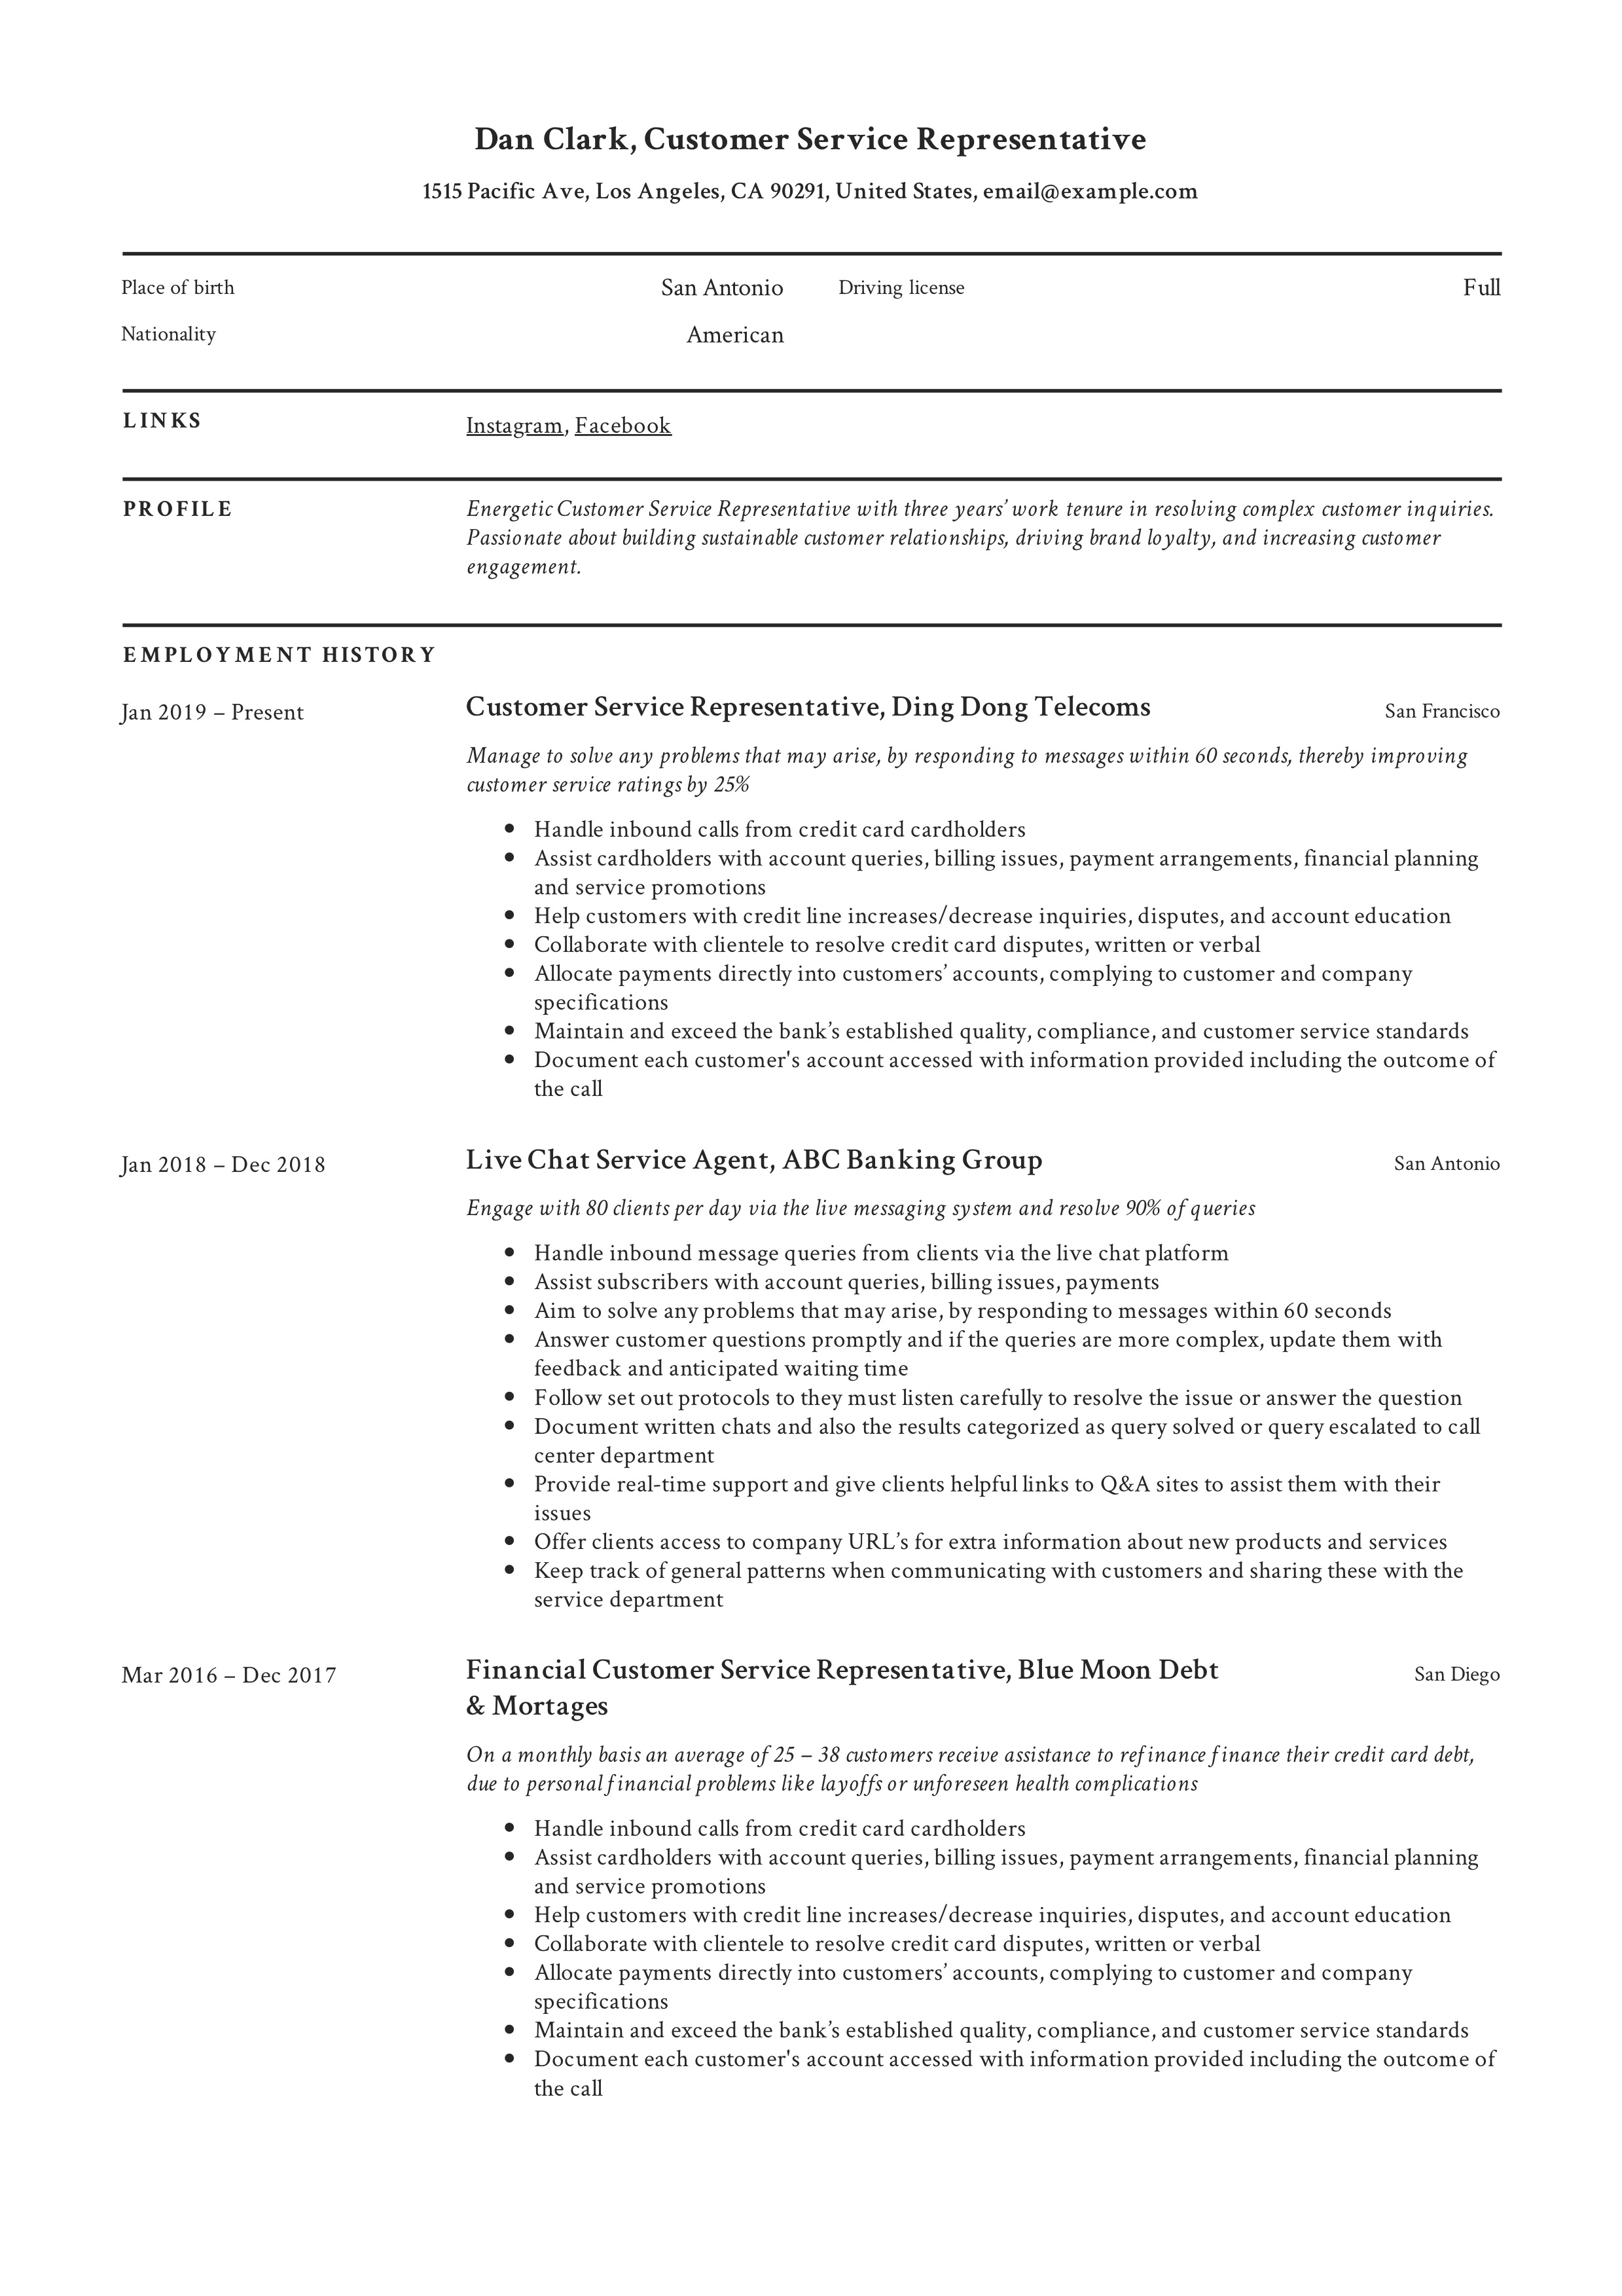 Resume For Customer Service Customer Service Representative Resume 2 resume for customer service|wikiresume.com